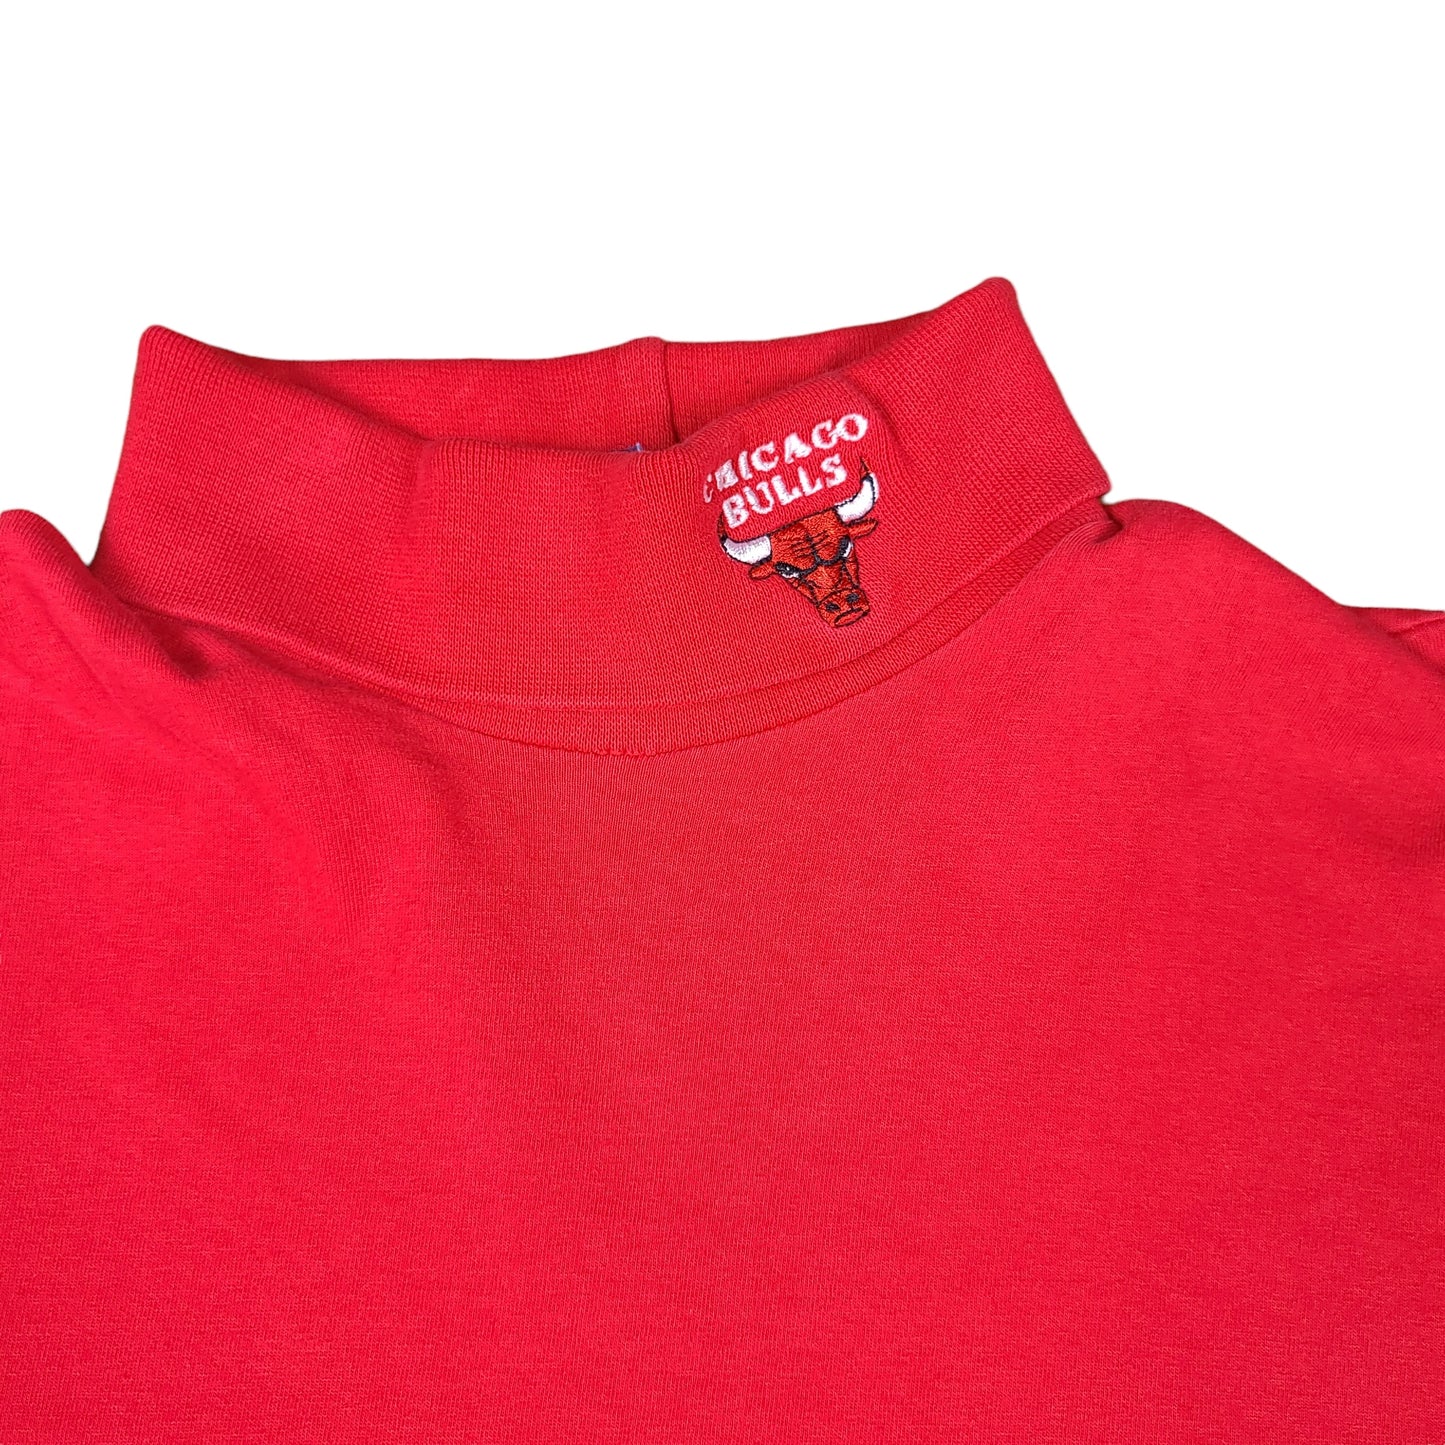 Vintage Chicago Bulls Red Turtle Neck Long Sleeve